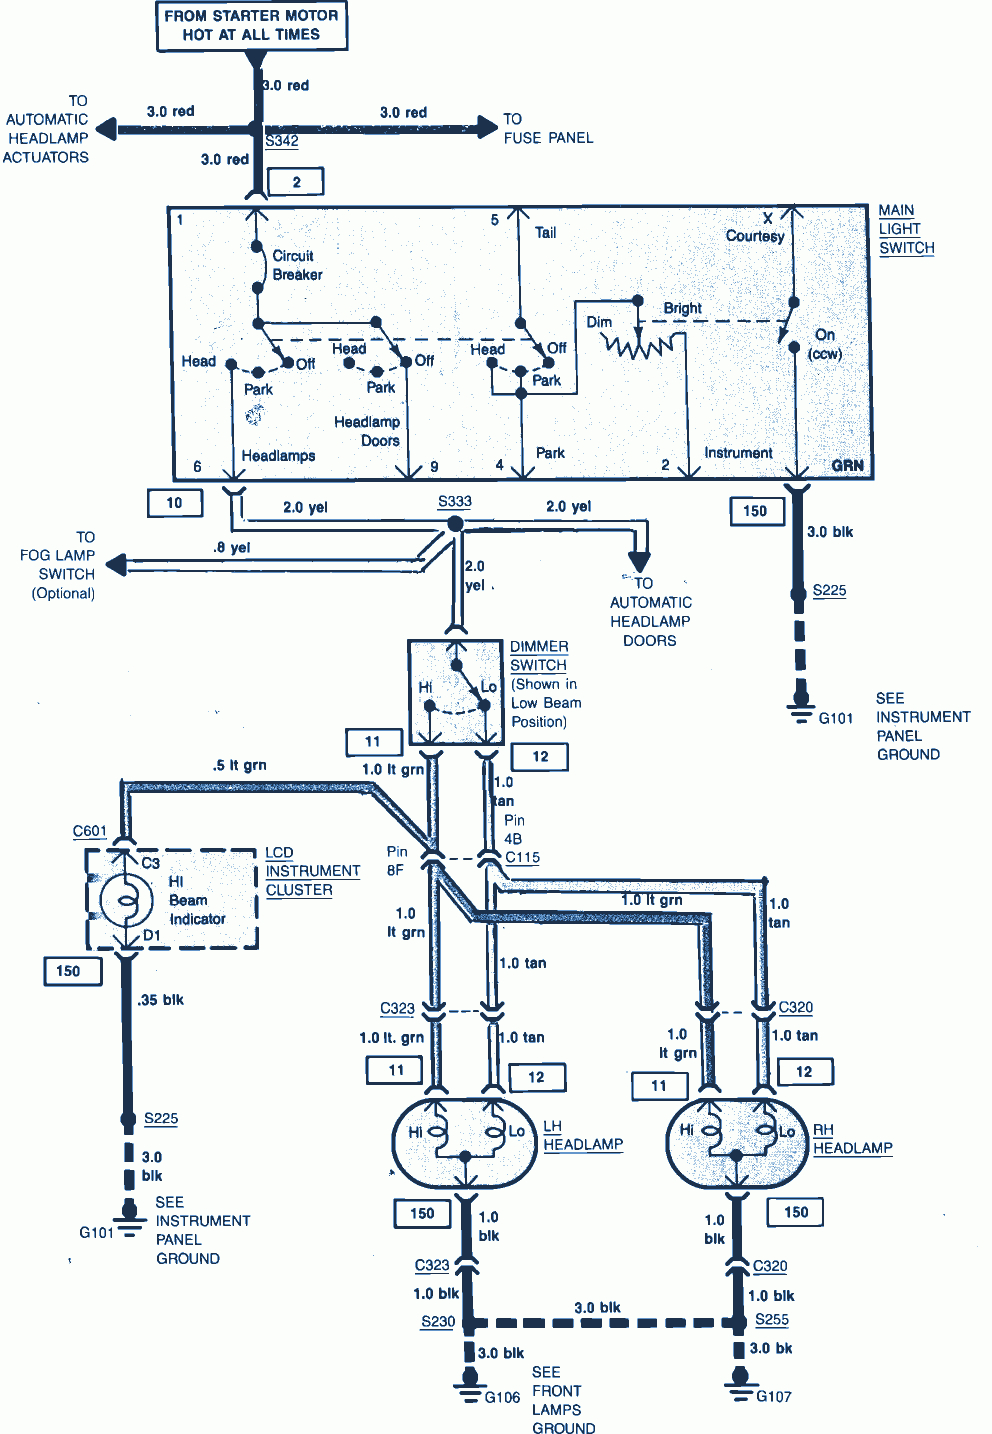 Harley Davidson Wire Diagram 84 | Wiring Library - Harley Davidson Radio Wiring Diagram